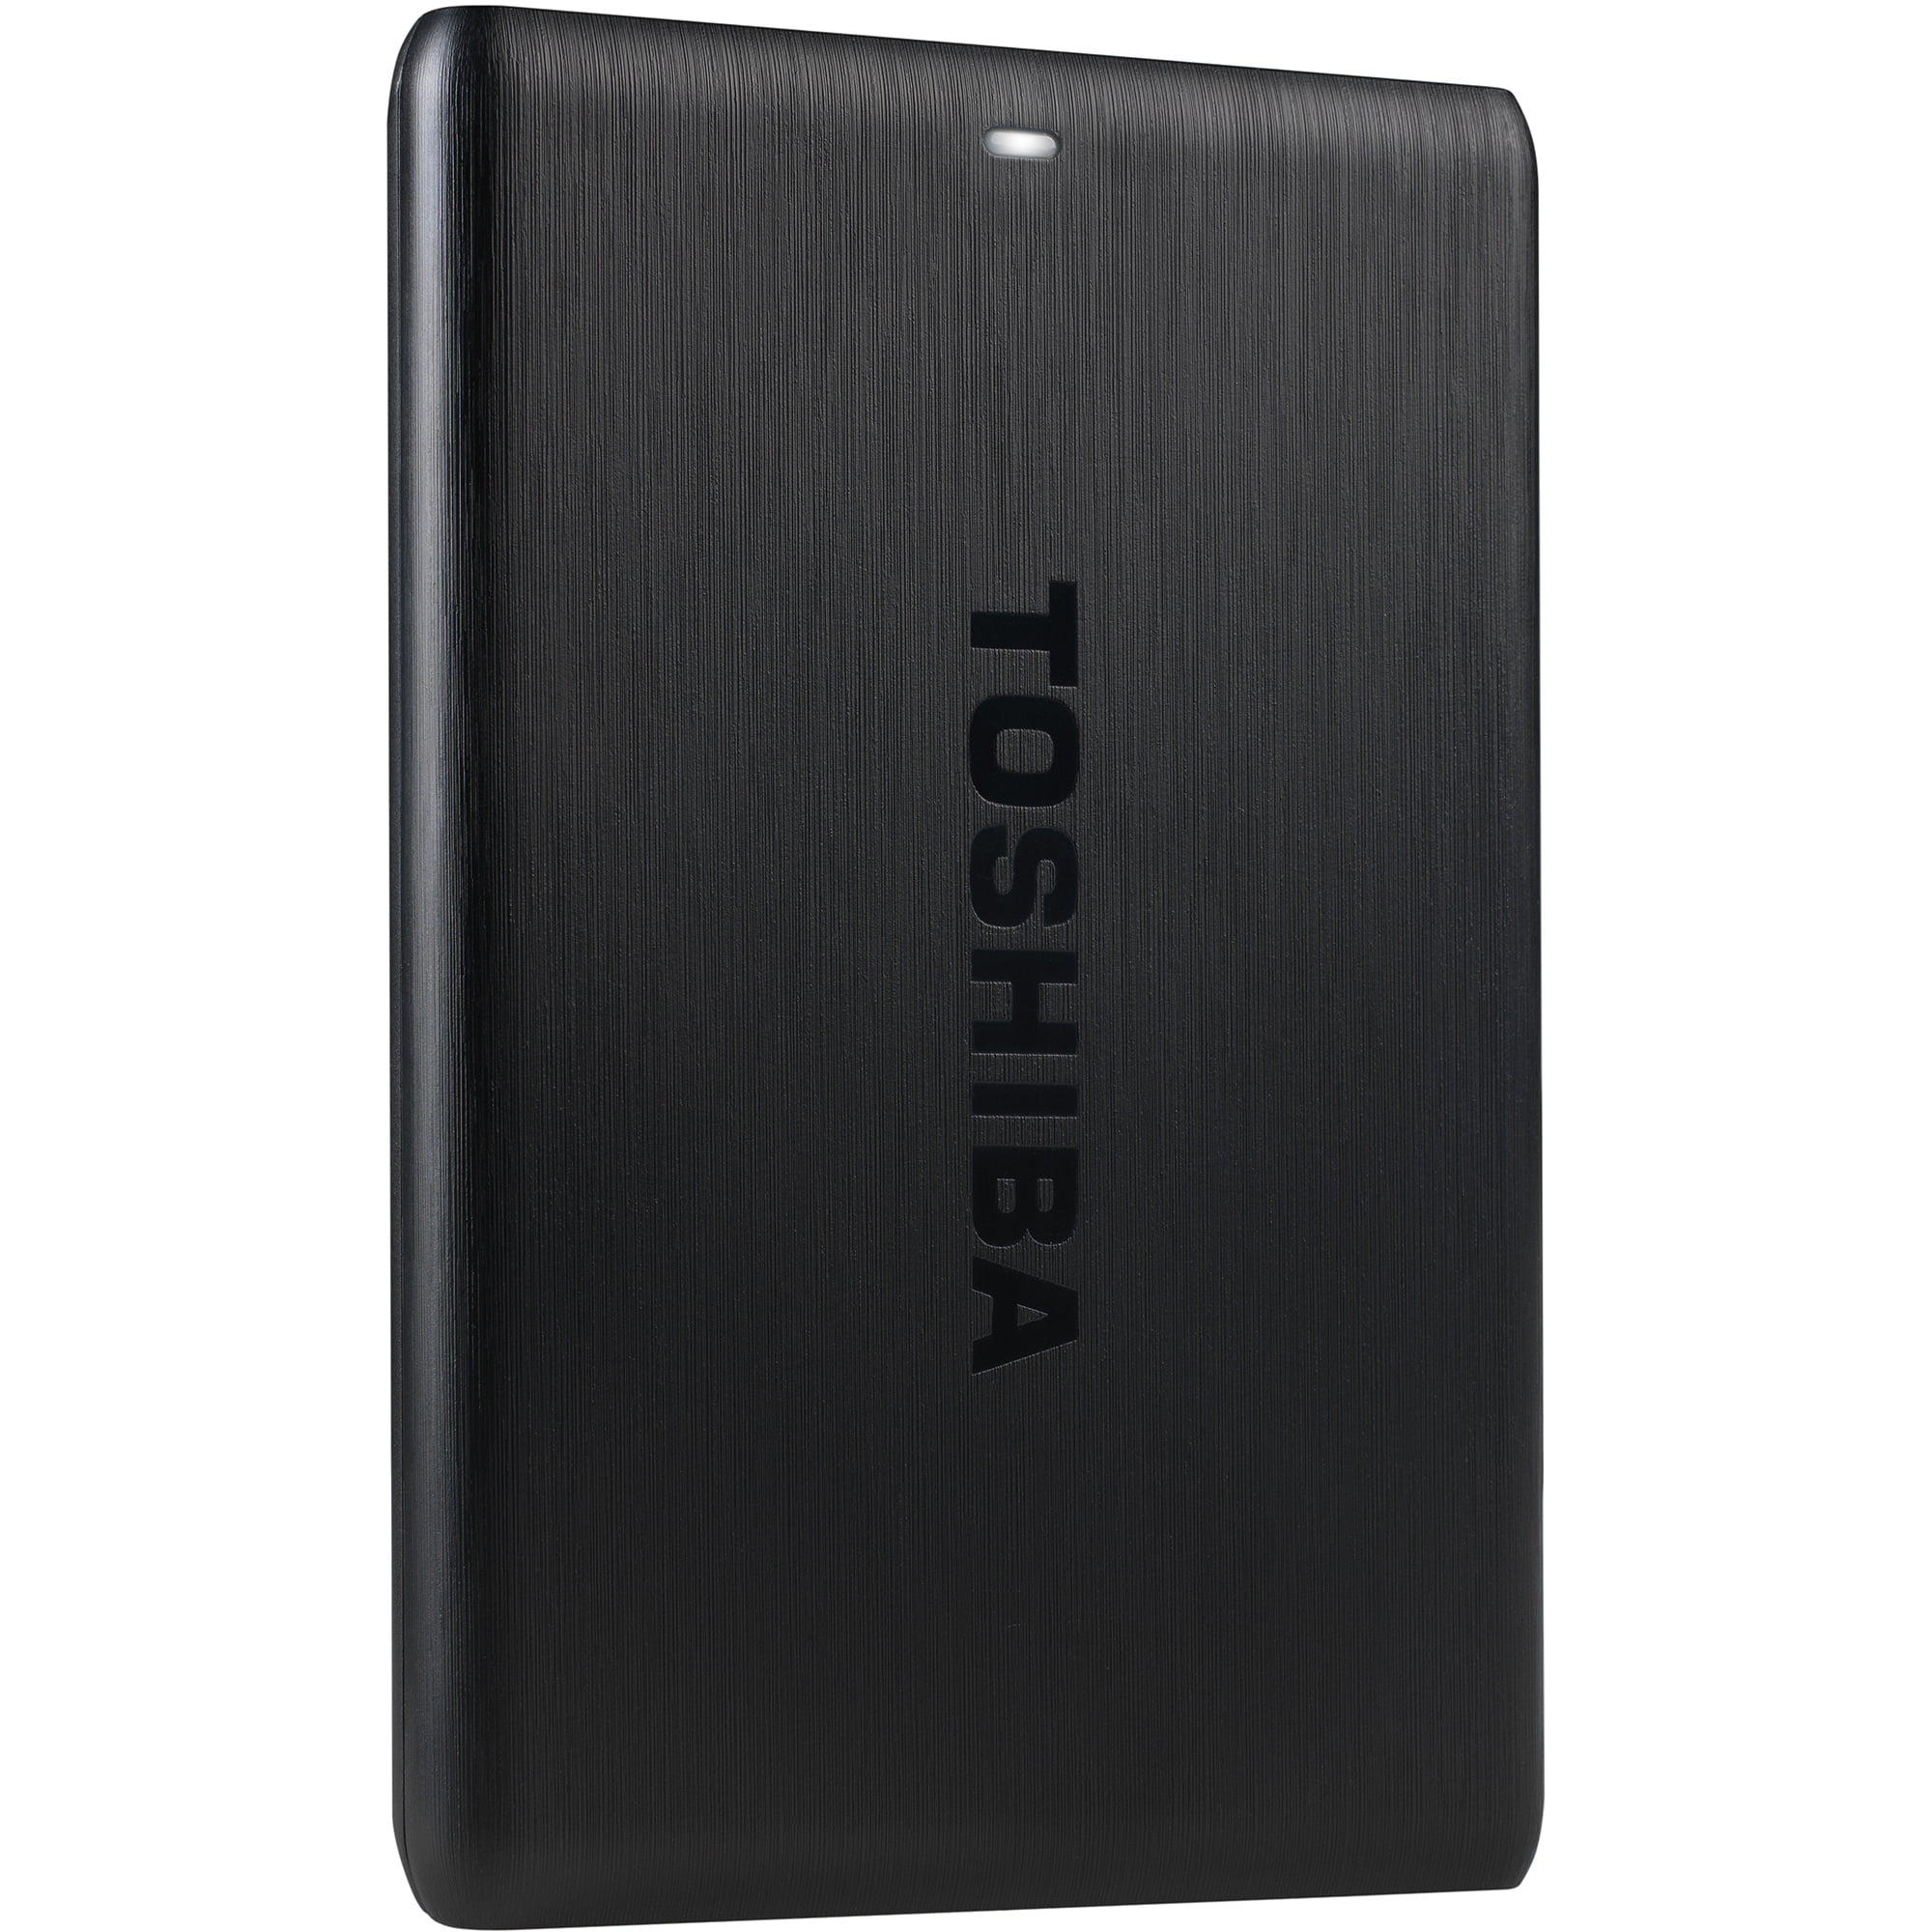 Toshiba 1tb Usb 30 Portable External Hard Drive With Backup Software